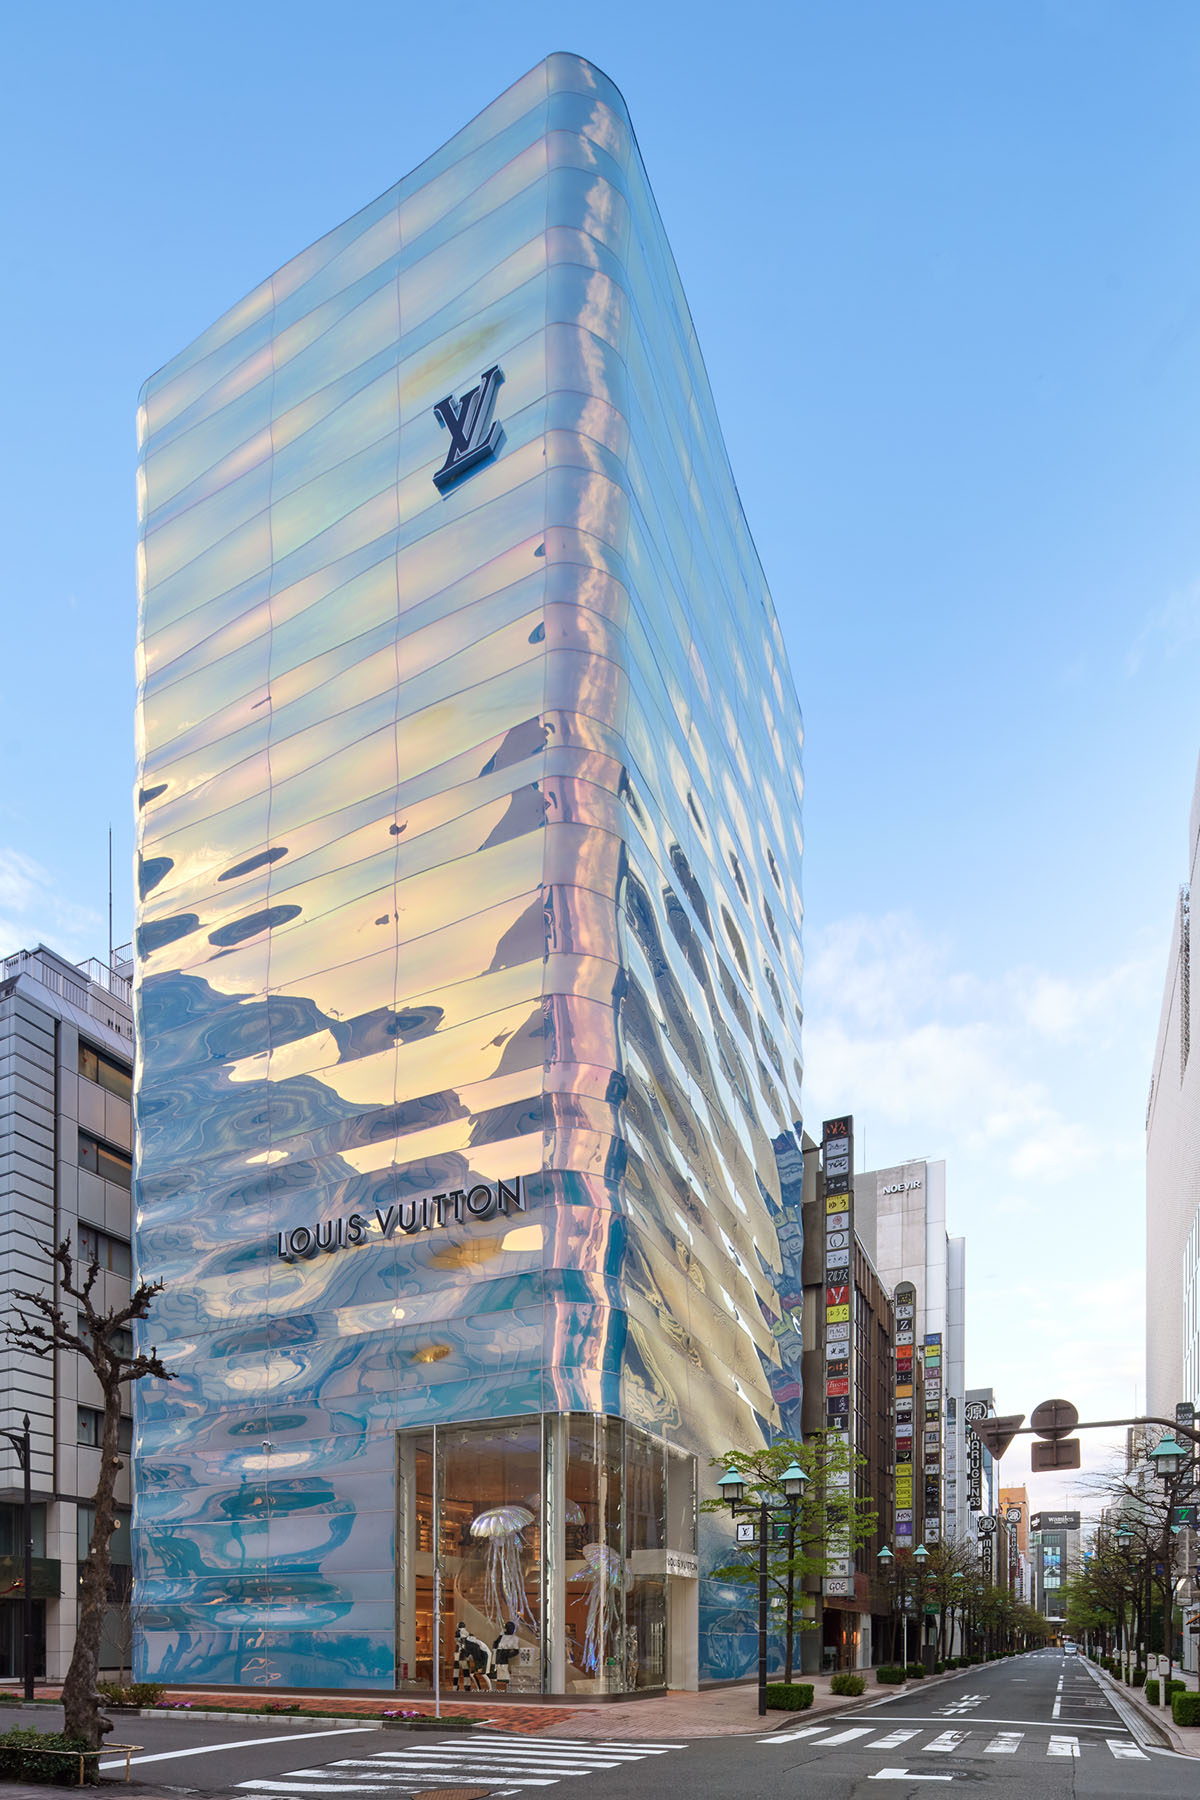 Jun Aoki and Peter Marino redesign Louis Vuitton's Ginza Namiki